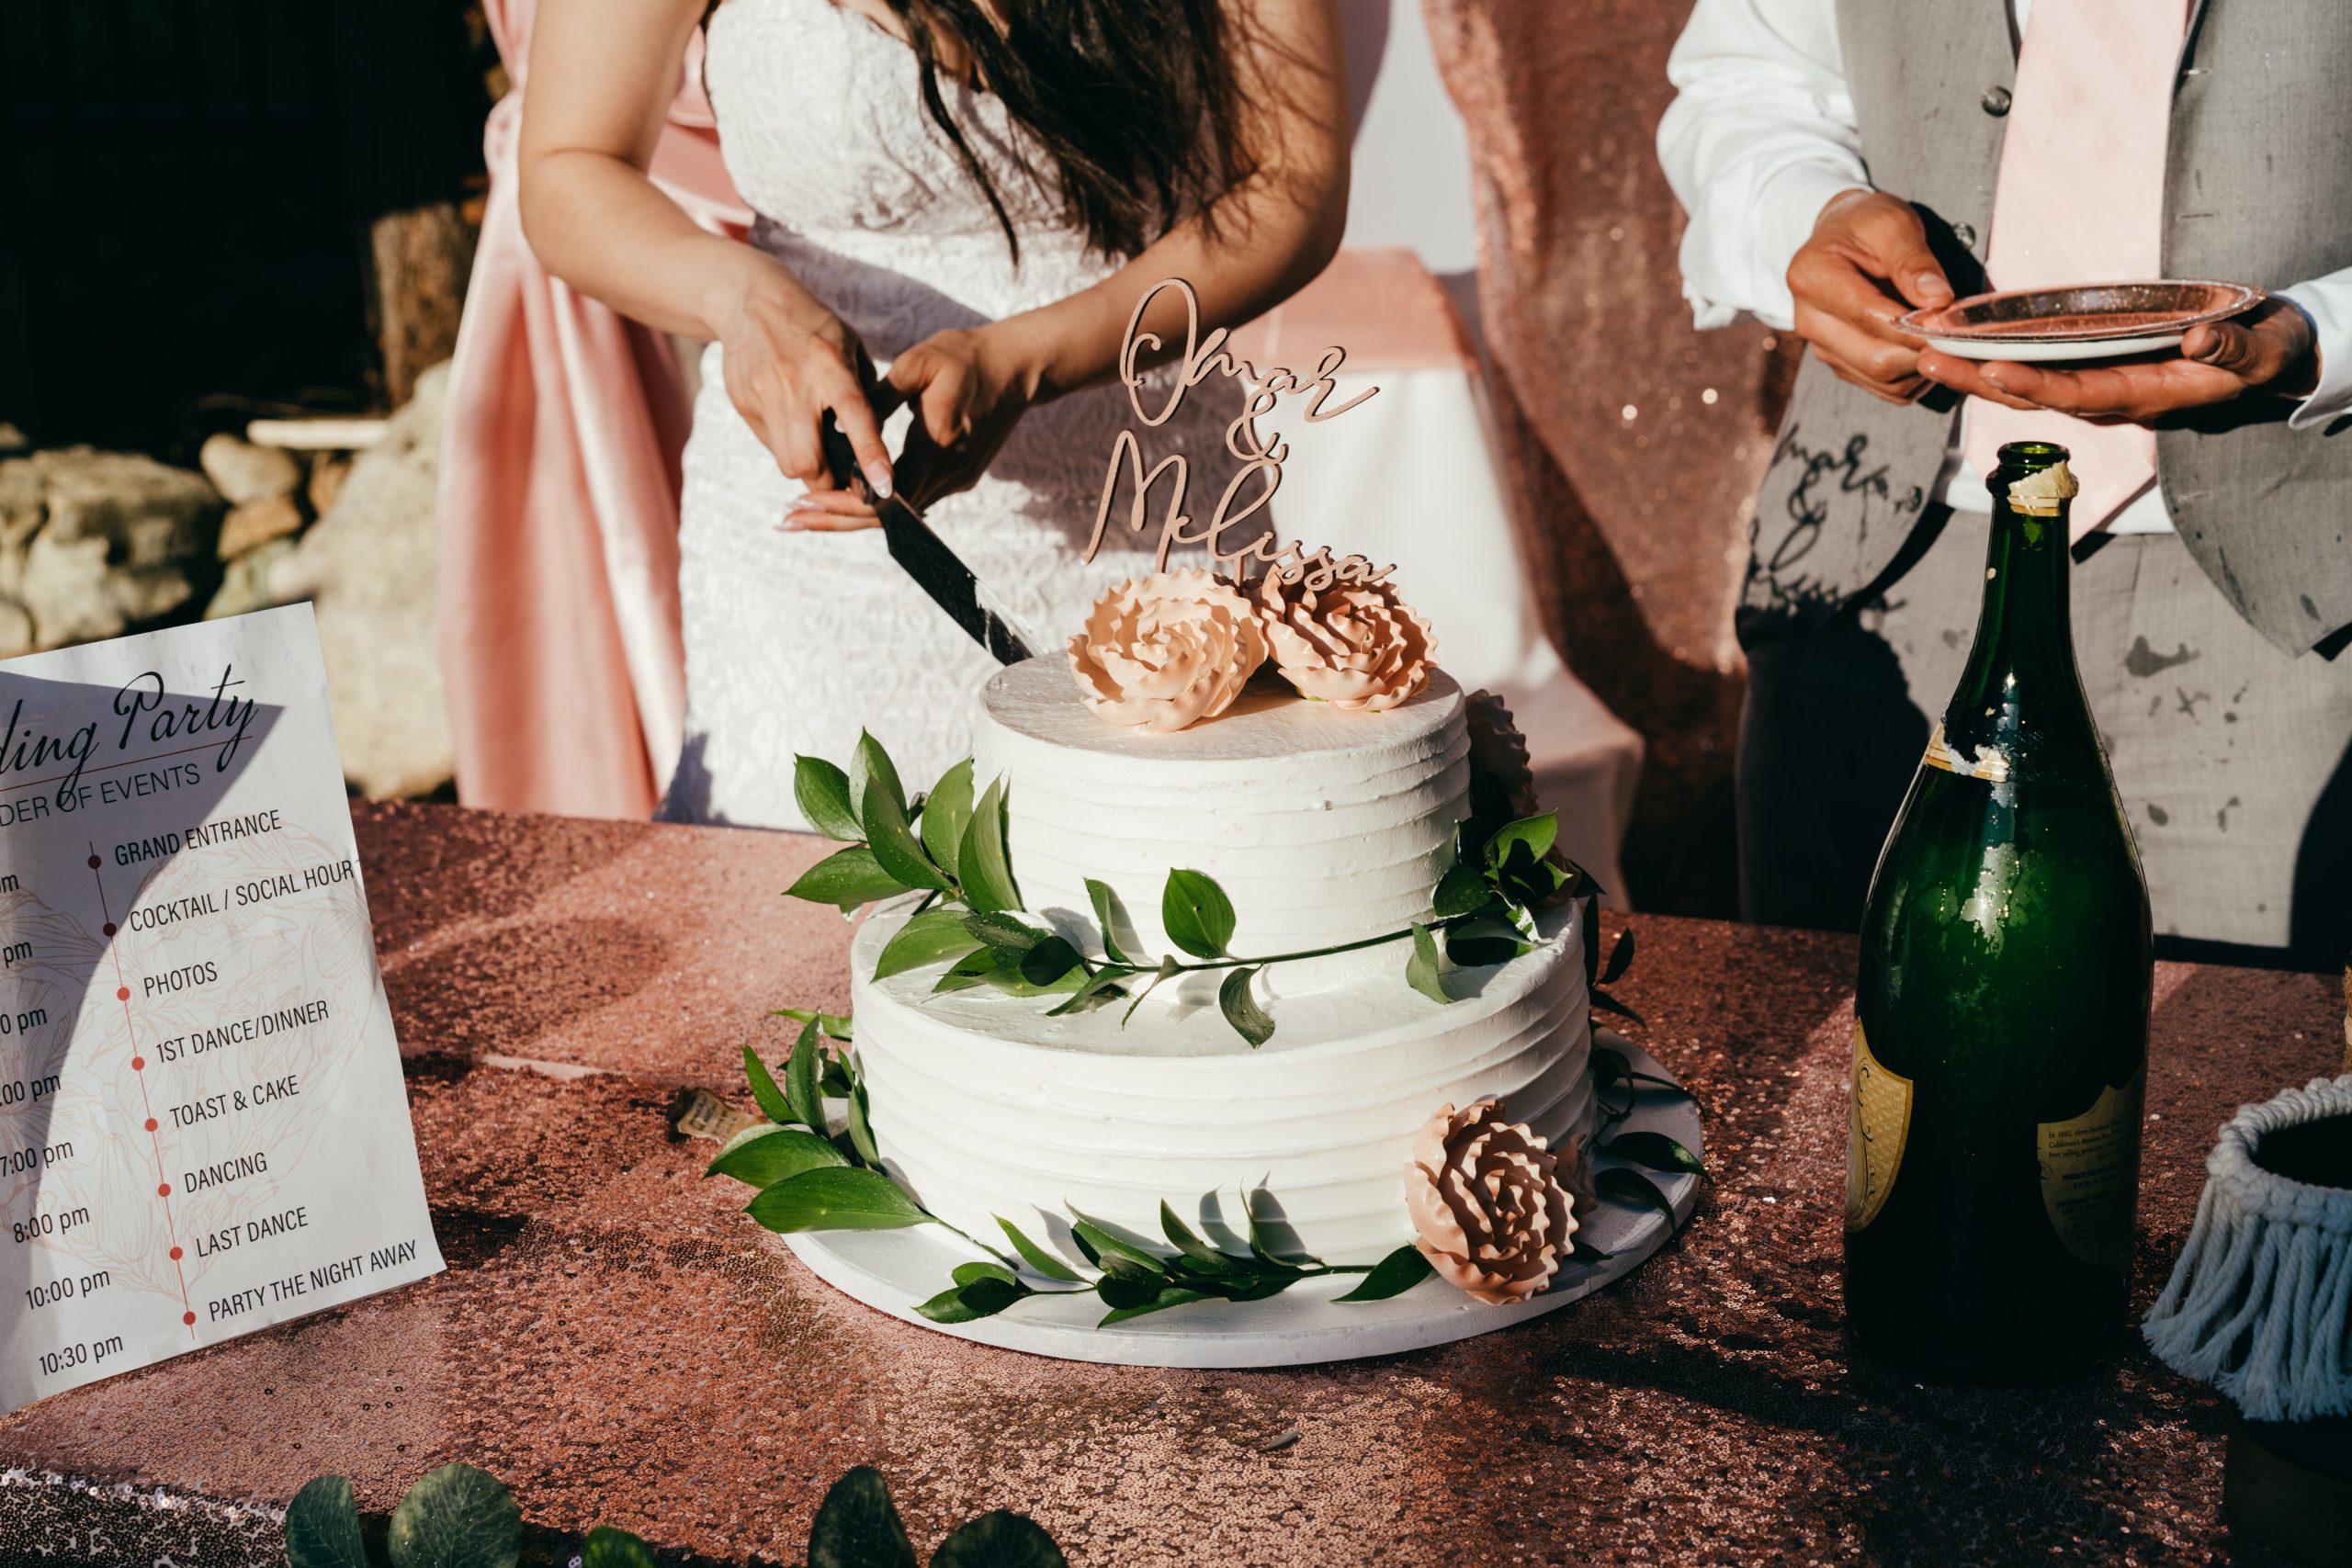 Hands of a bride cutting a wedding cake.